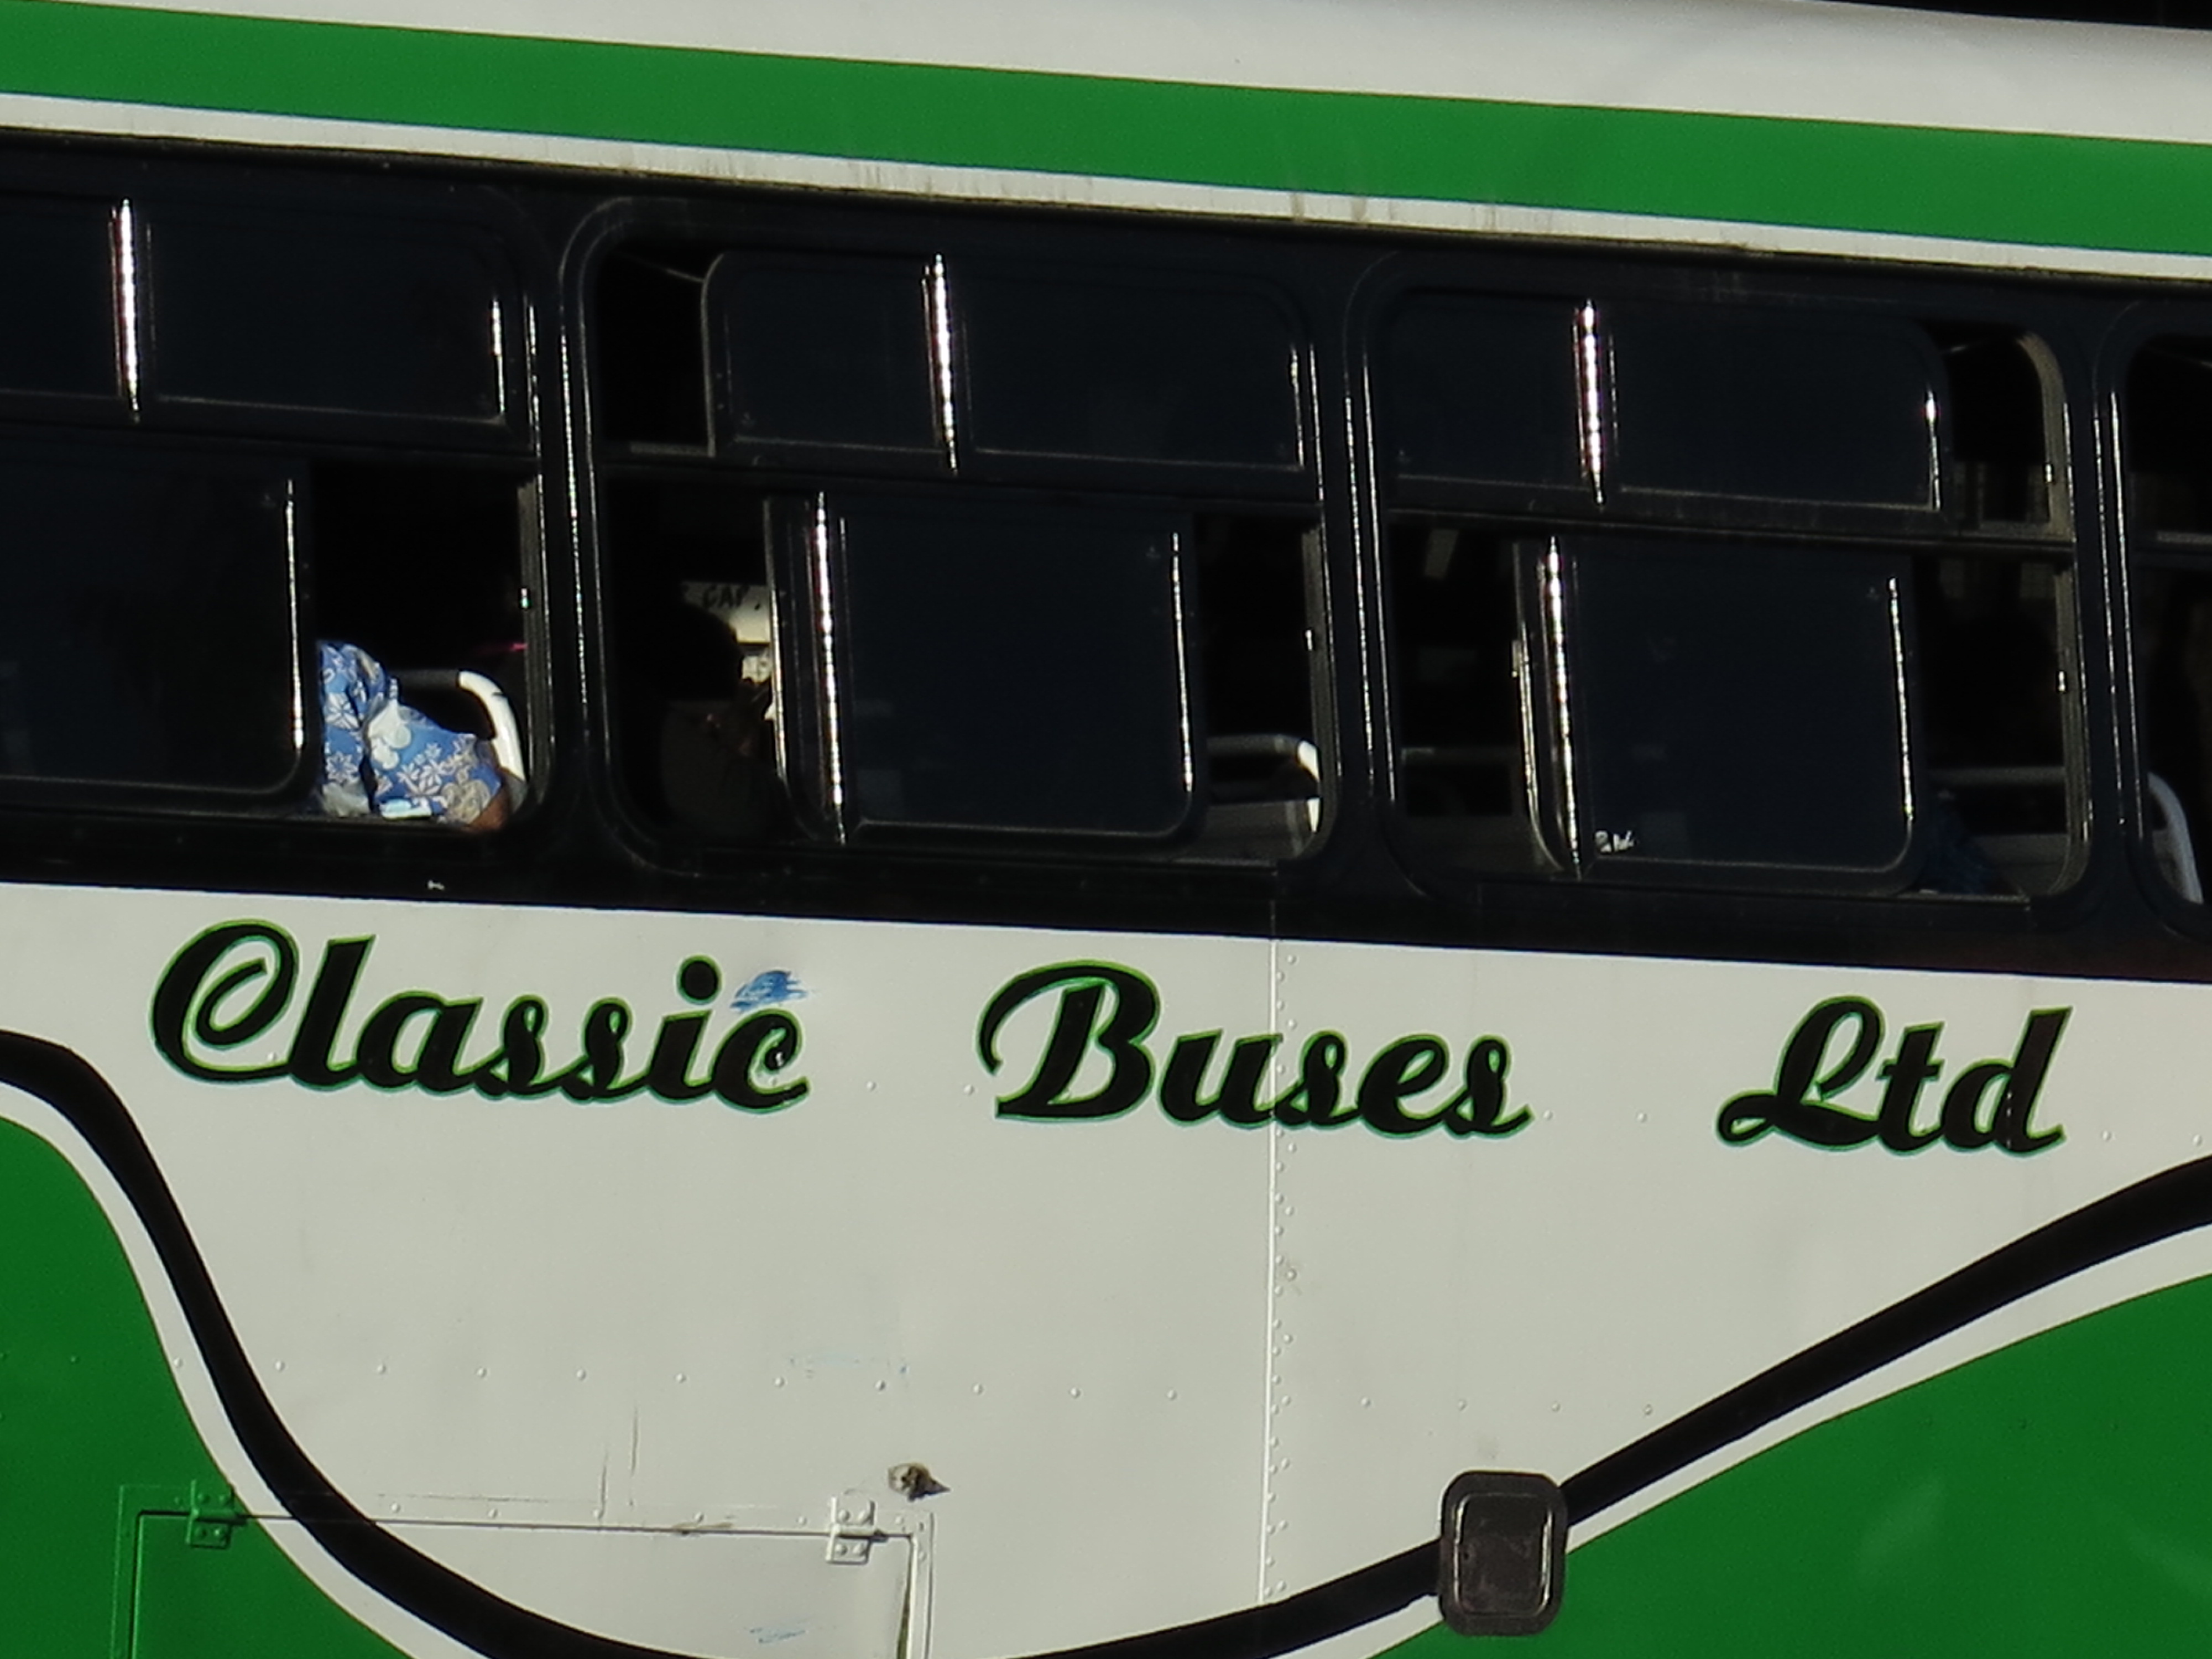 Lautoka City Bus - Classic Buses Ltd